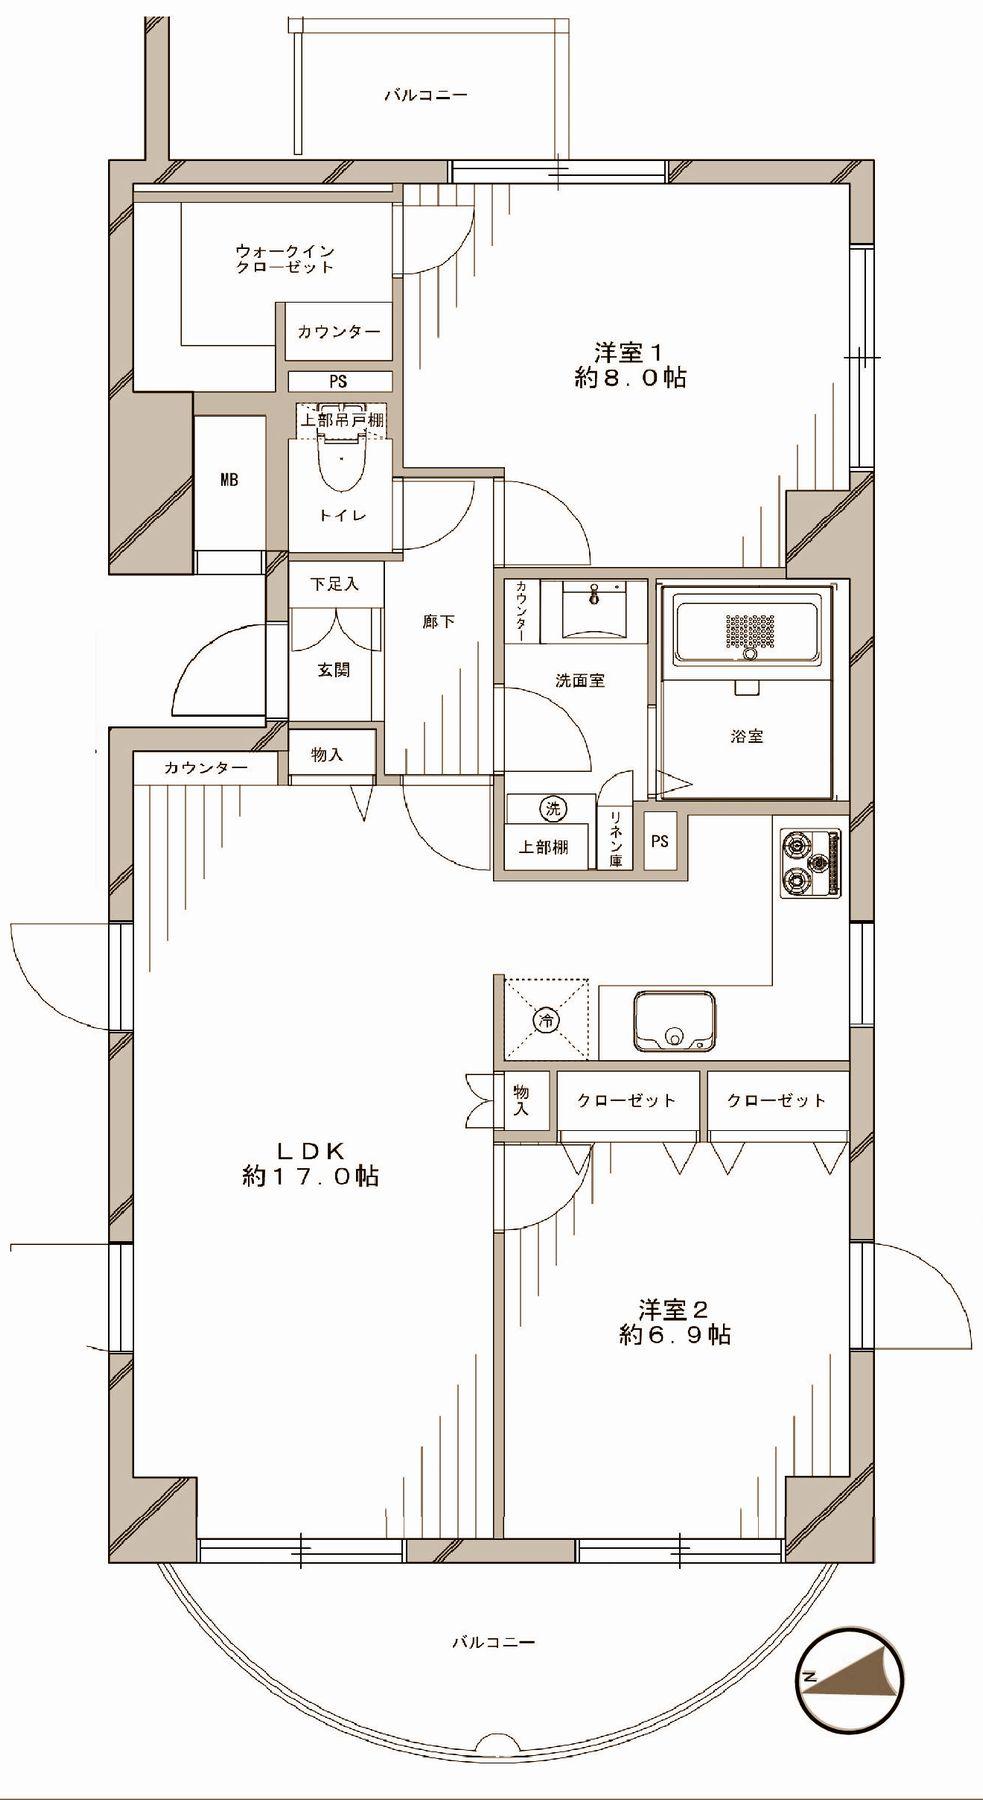 Floor plan. 2LDK, Price 58,800,000 yen, Occupied area 73.12 sq m , 2LDK of balcony area 9.41 sq m 4 direction angle room